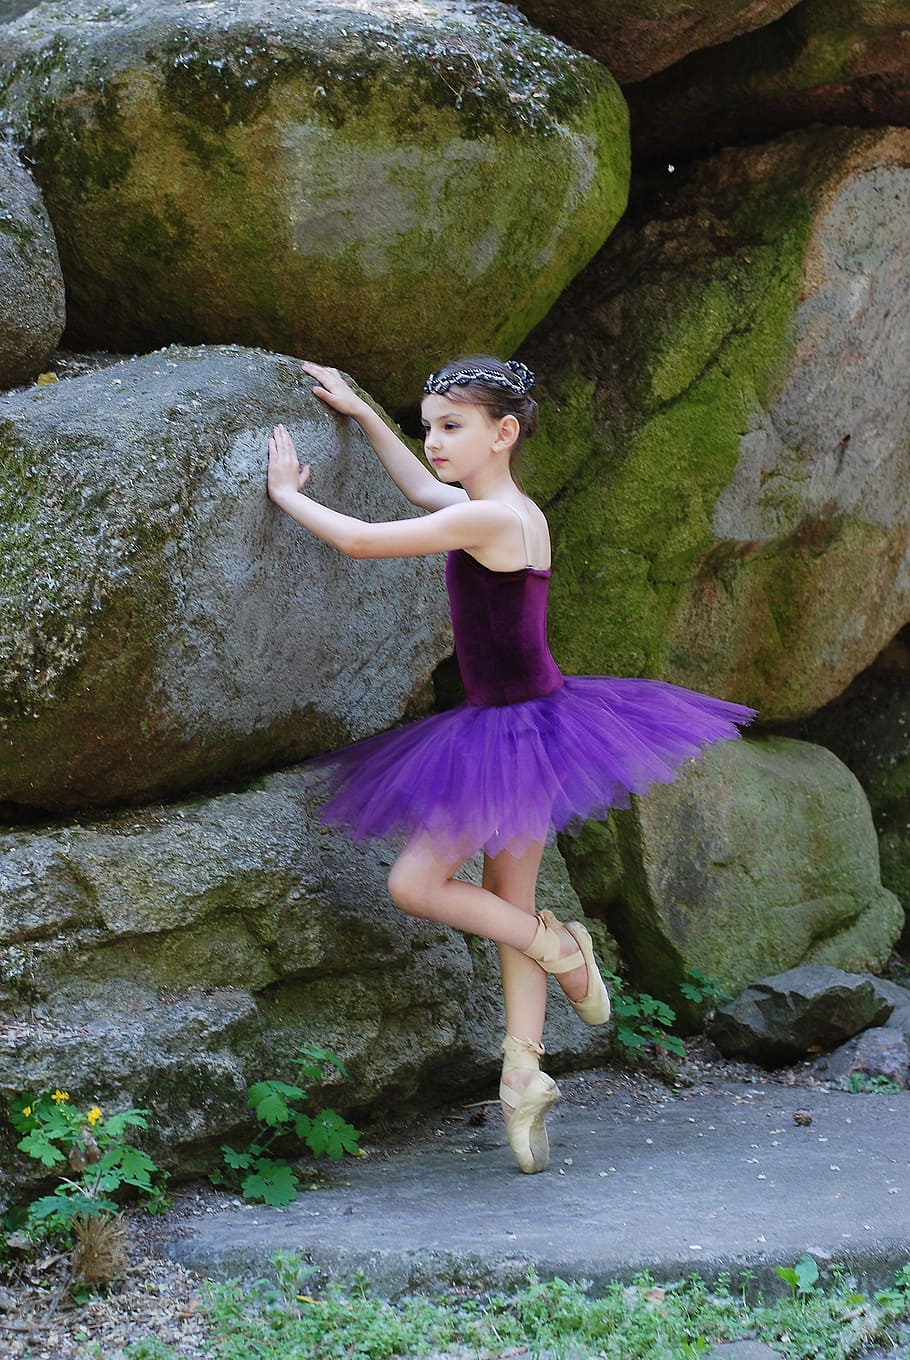 HD wallpaper: girl in purple tutu dress, ballet, ballerina, ballet tutu, dancer